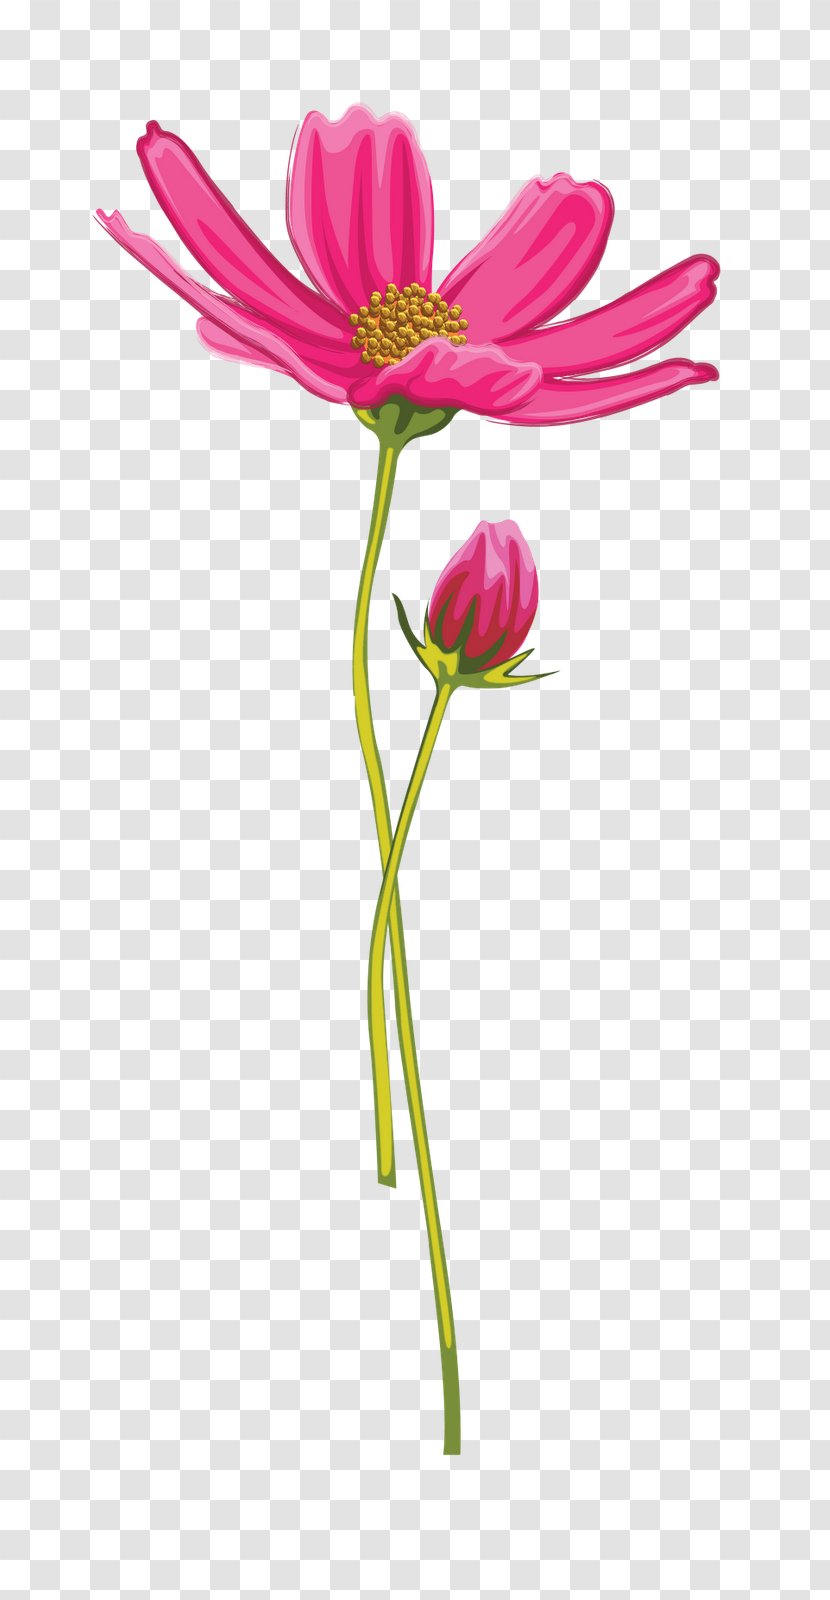 Diary Tulip Flower LiveInternet Blog - Cut Flowers Transparent PNG